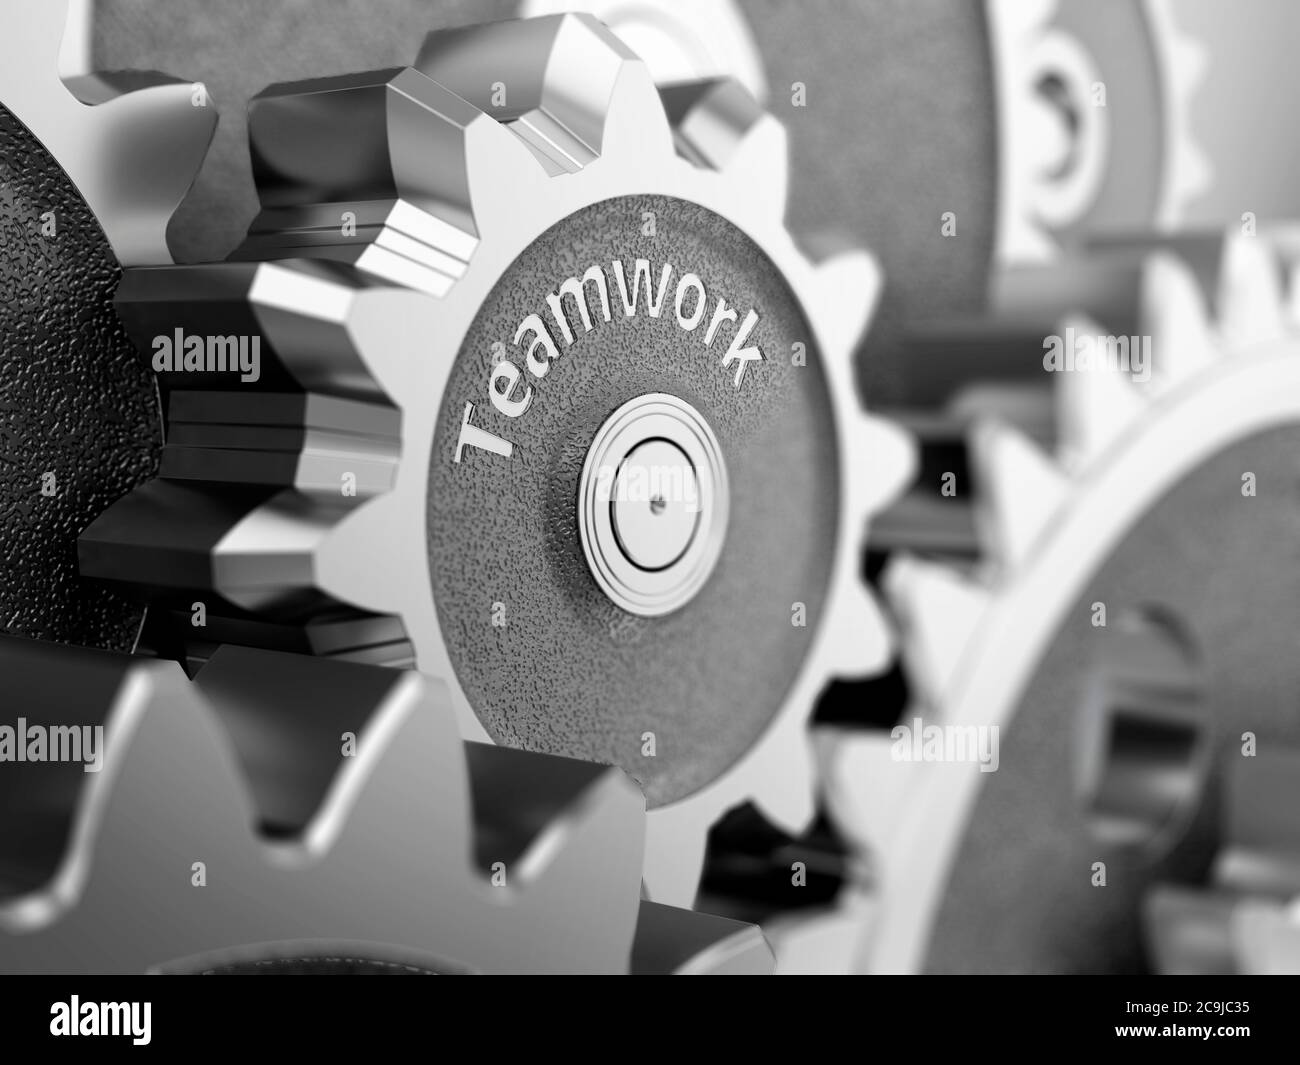 Teamwork concept, gear wheels close-up. 3d illustration. Stock Photo